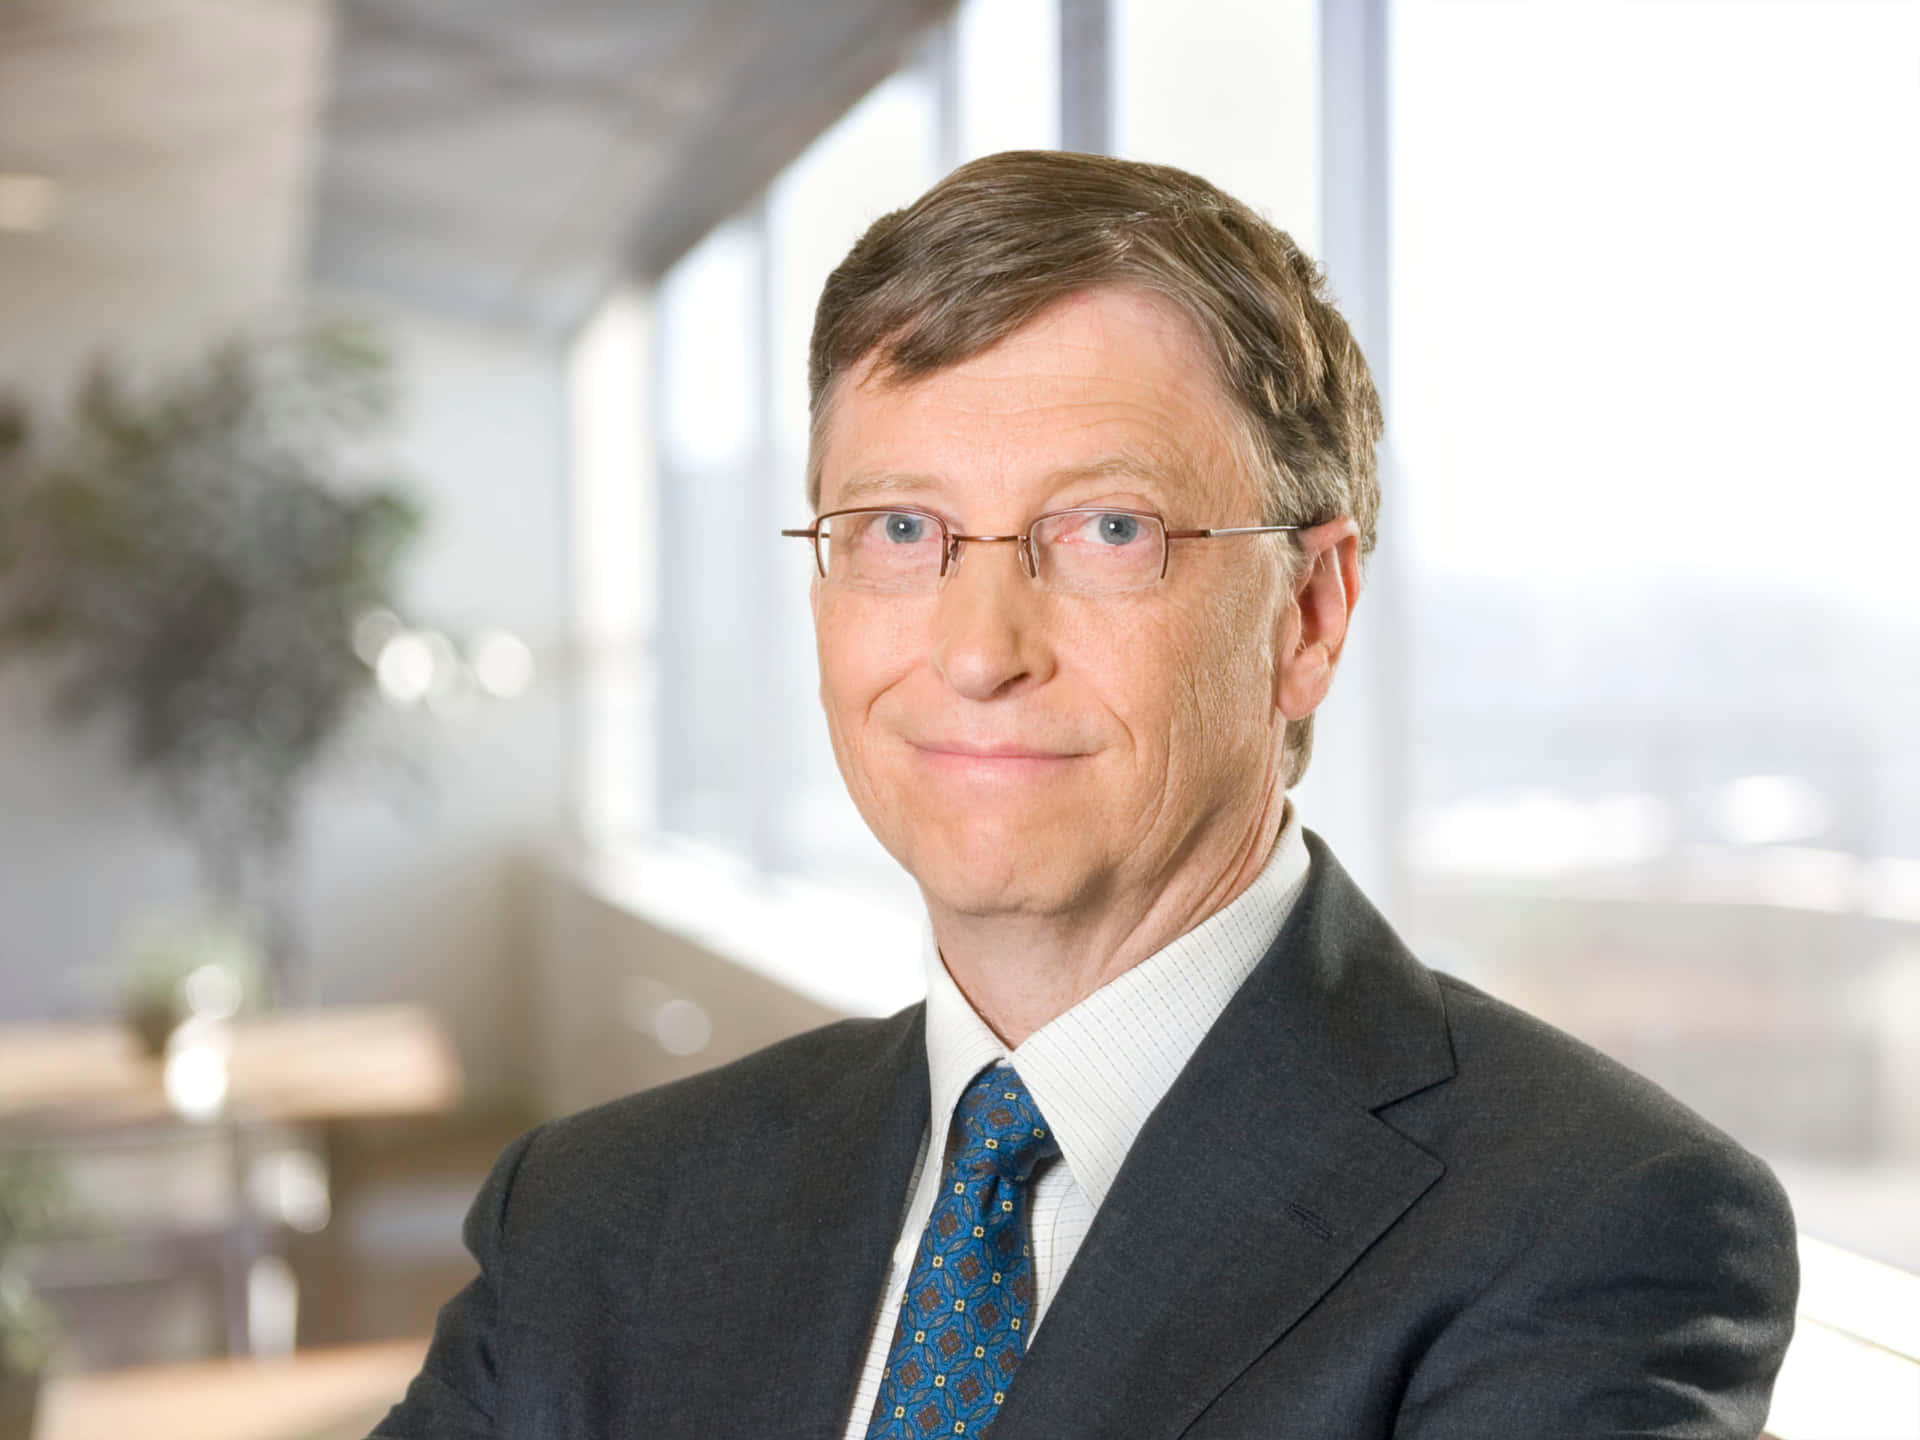 Bill Gates, co-founder of Microsoft